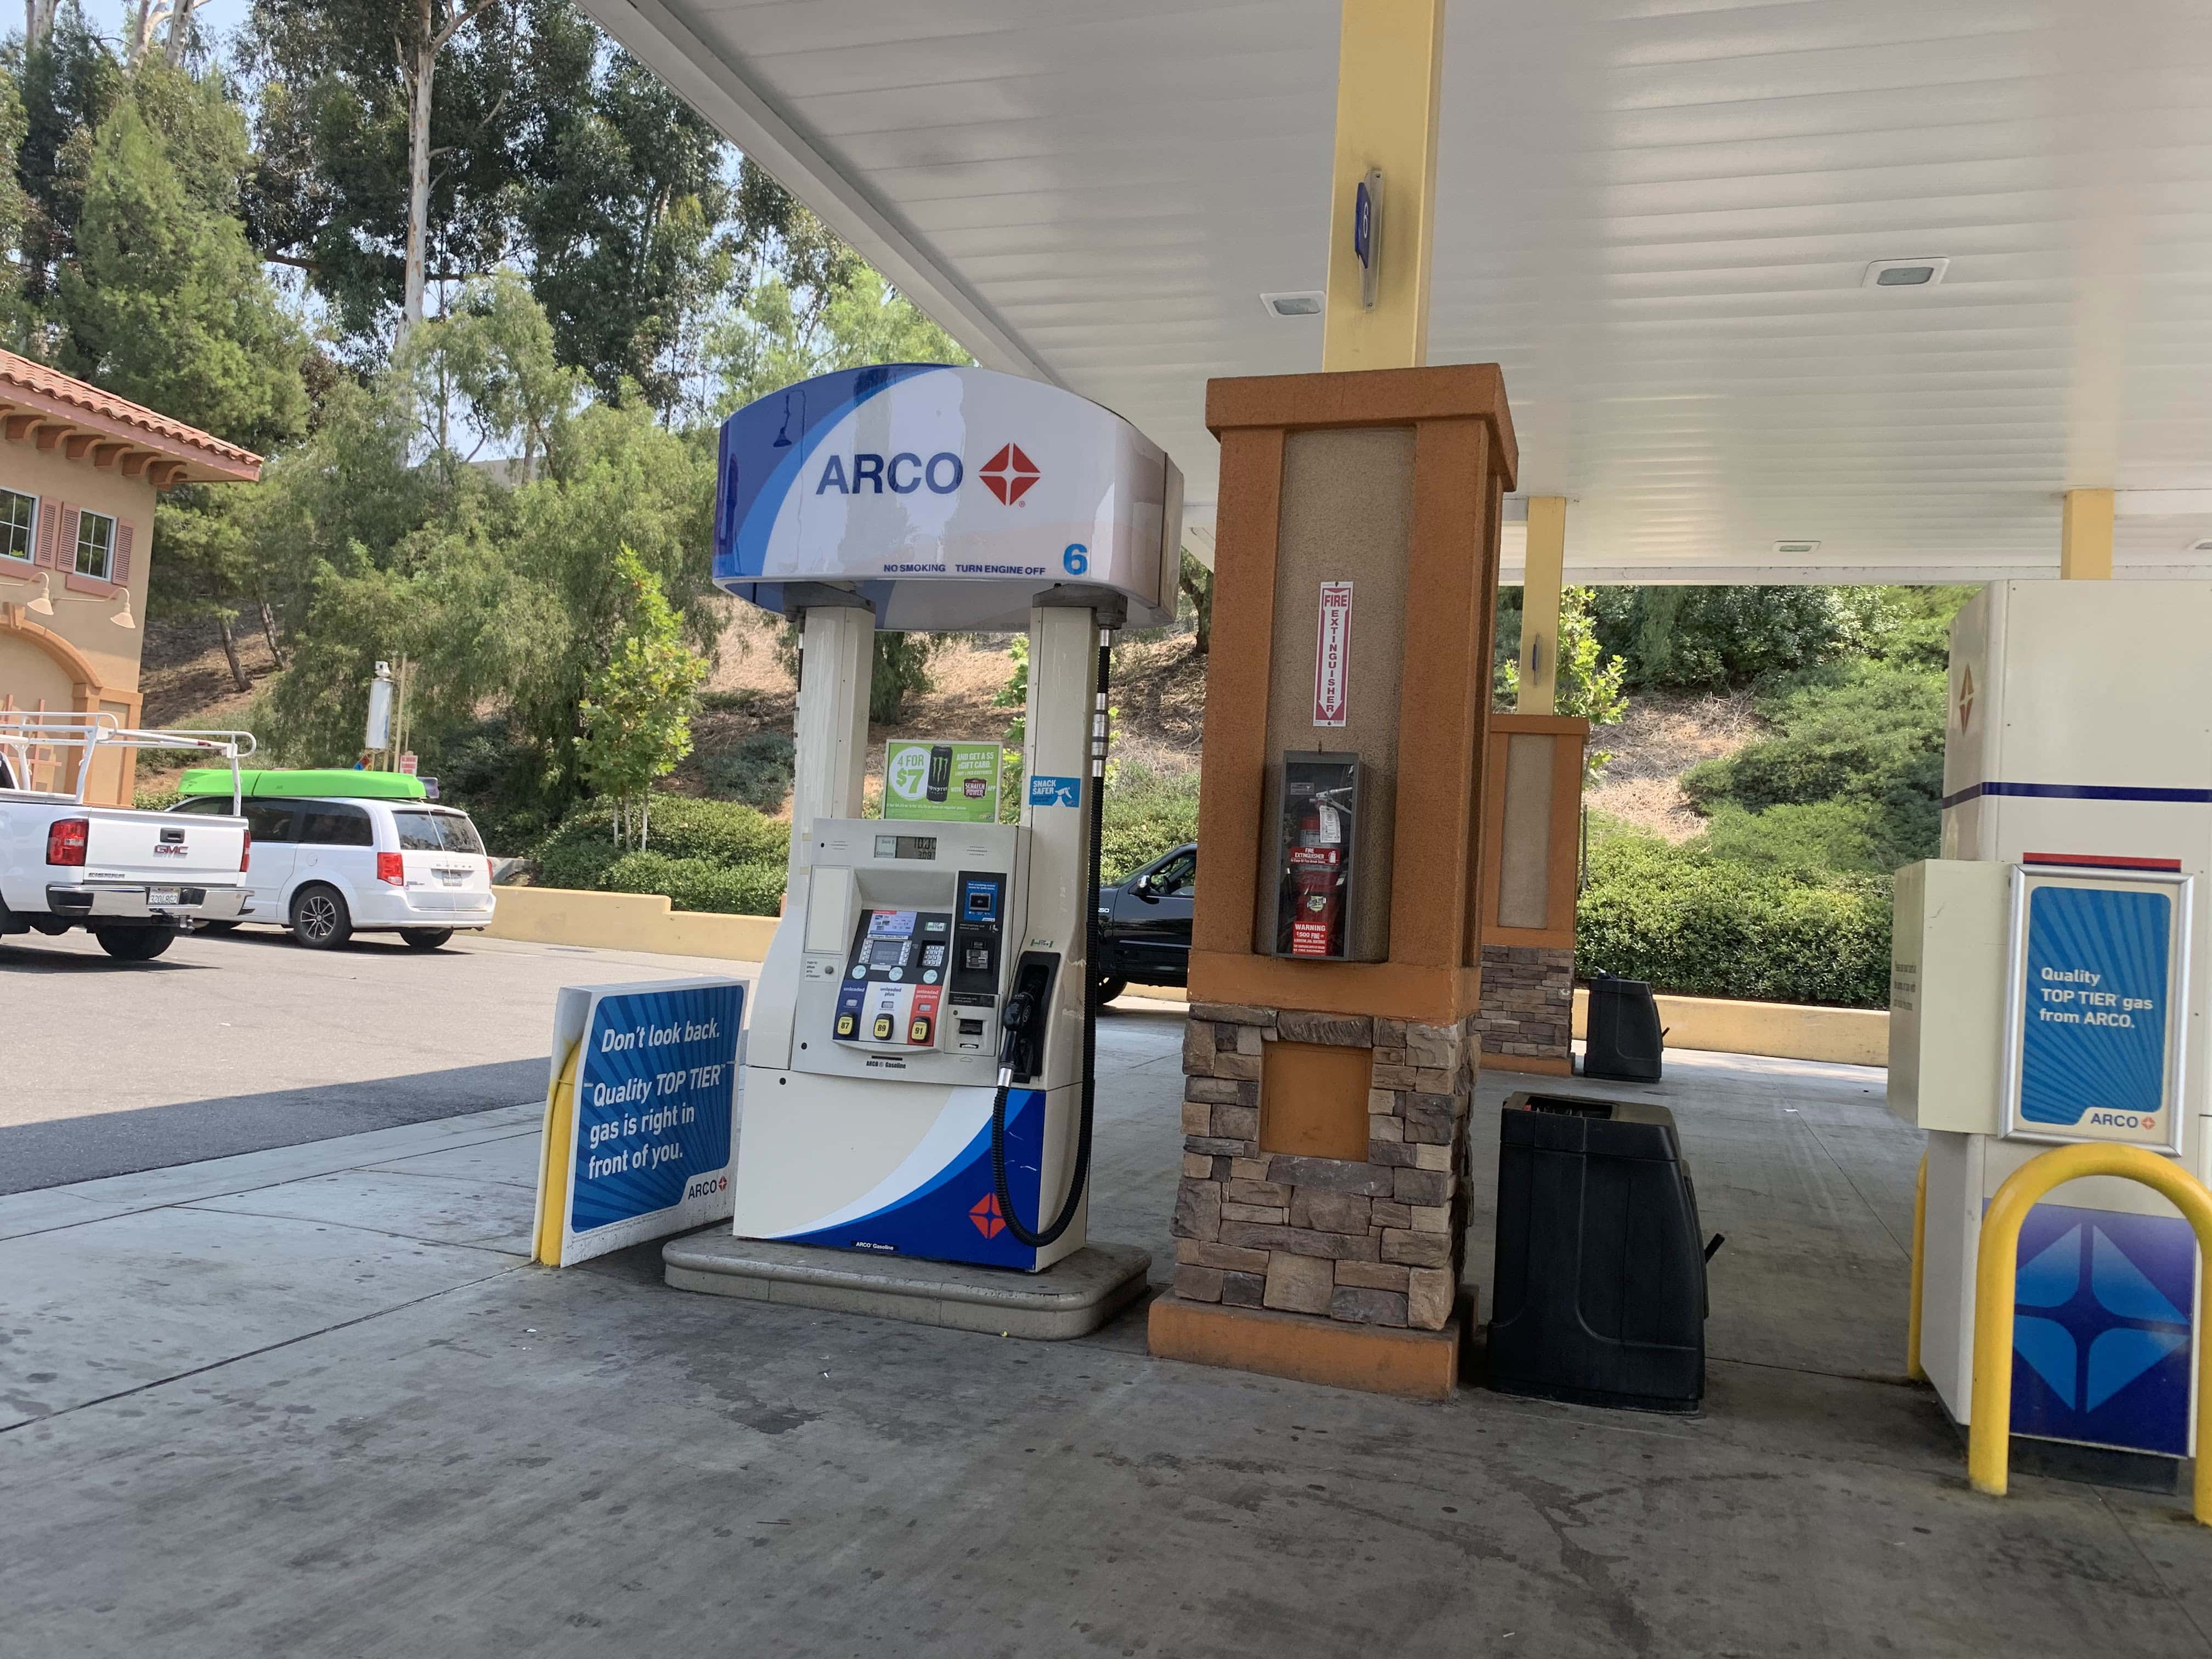 ARCO - Mission Viejo (CA 92691), US, gas station near my location